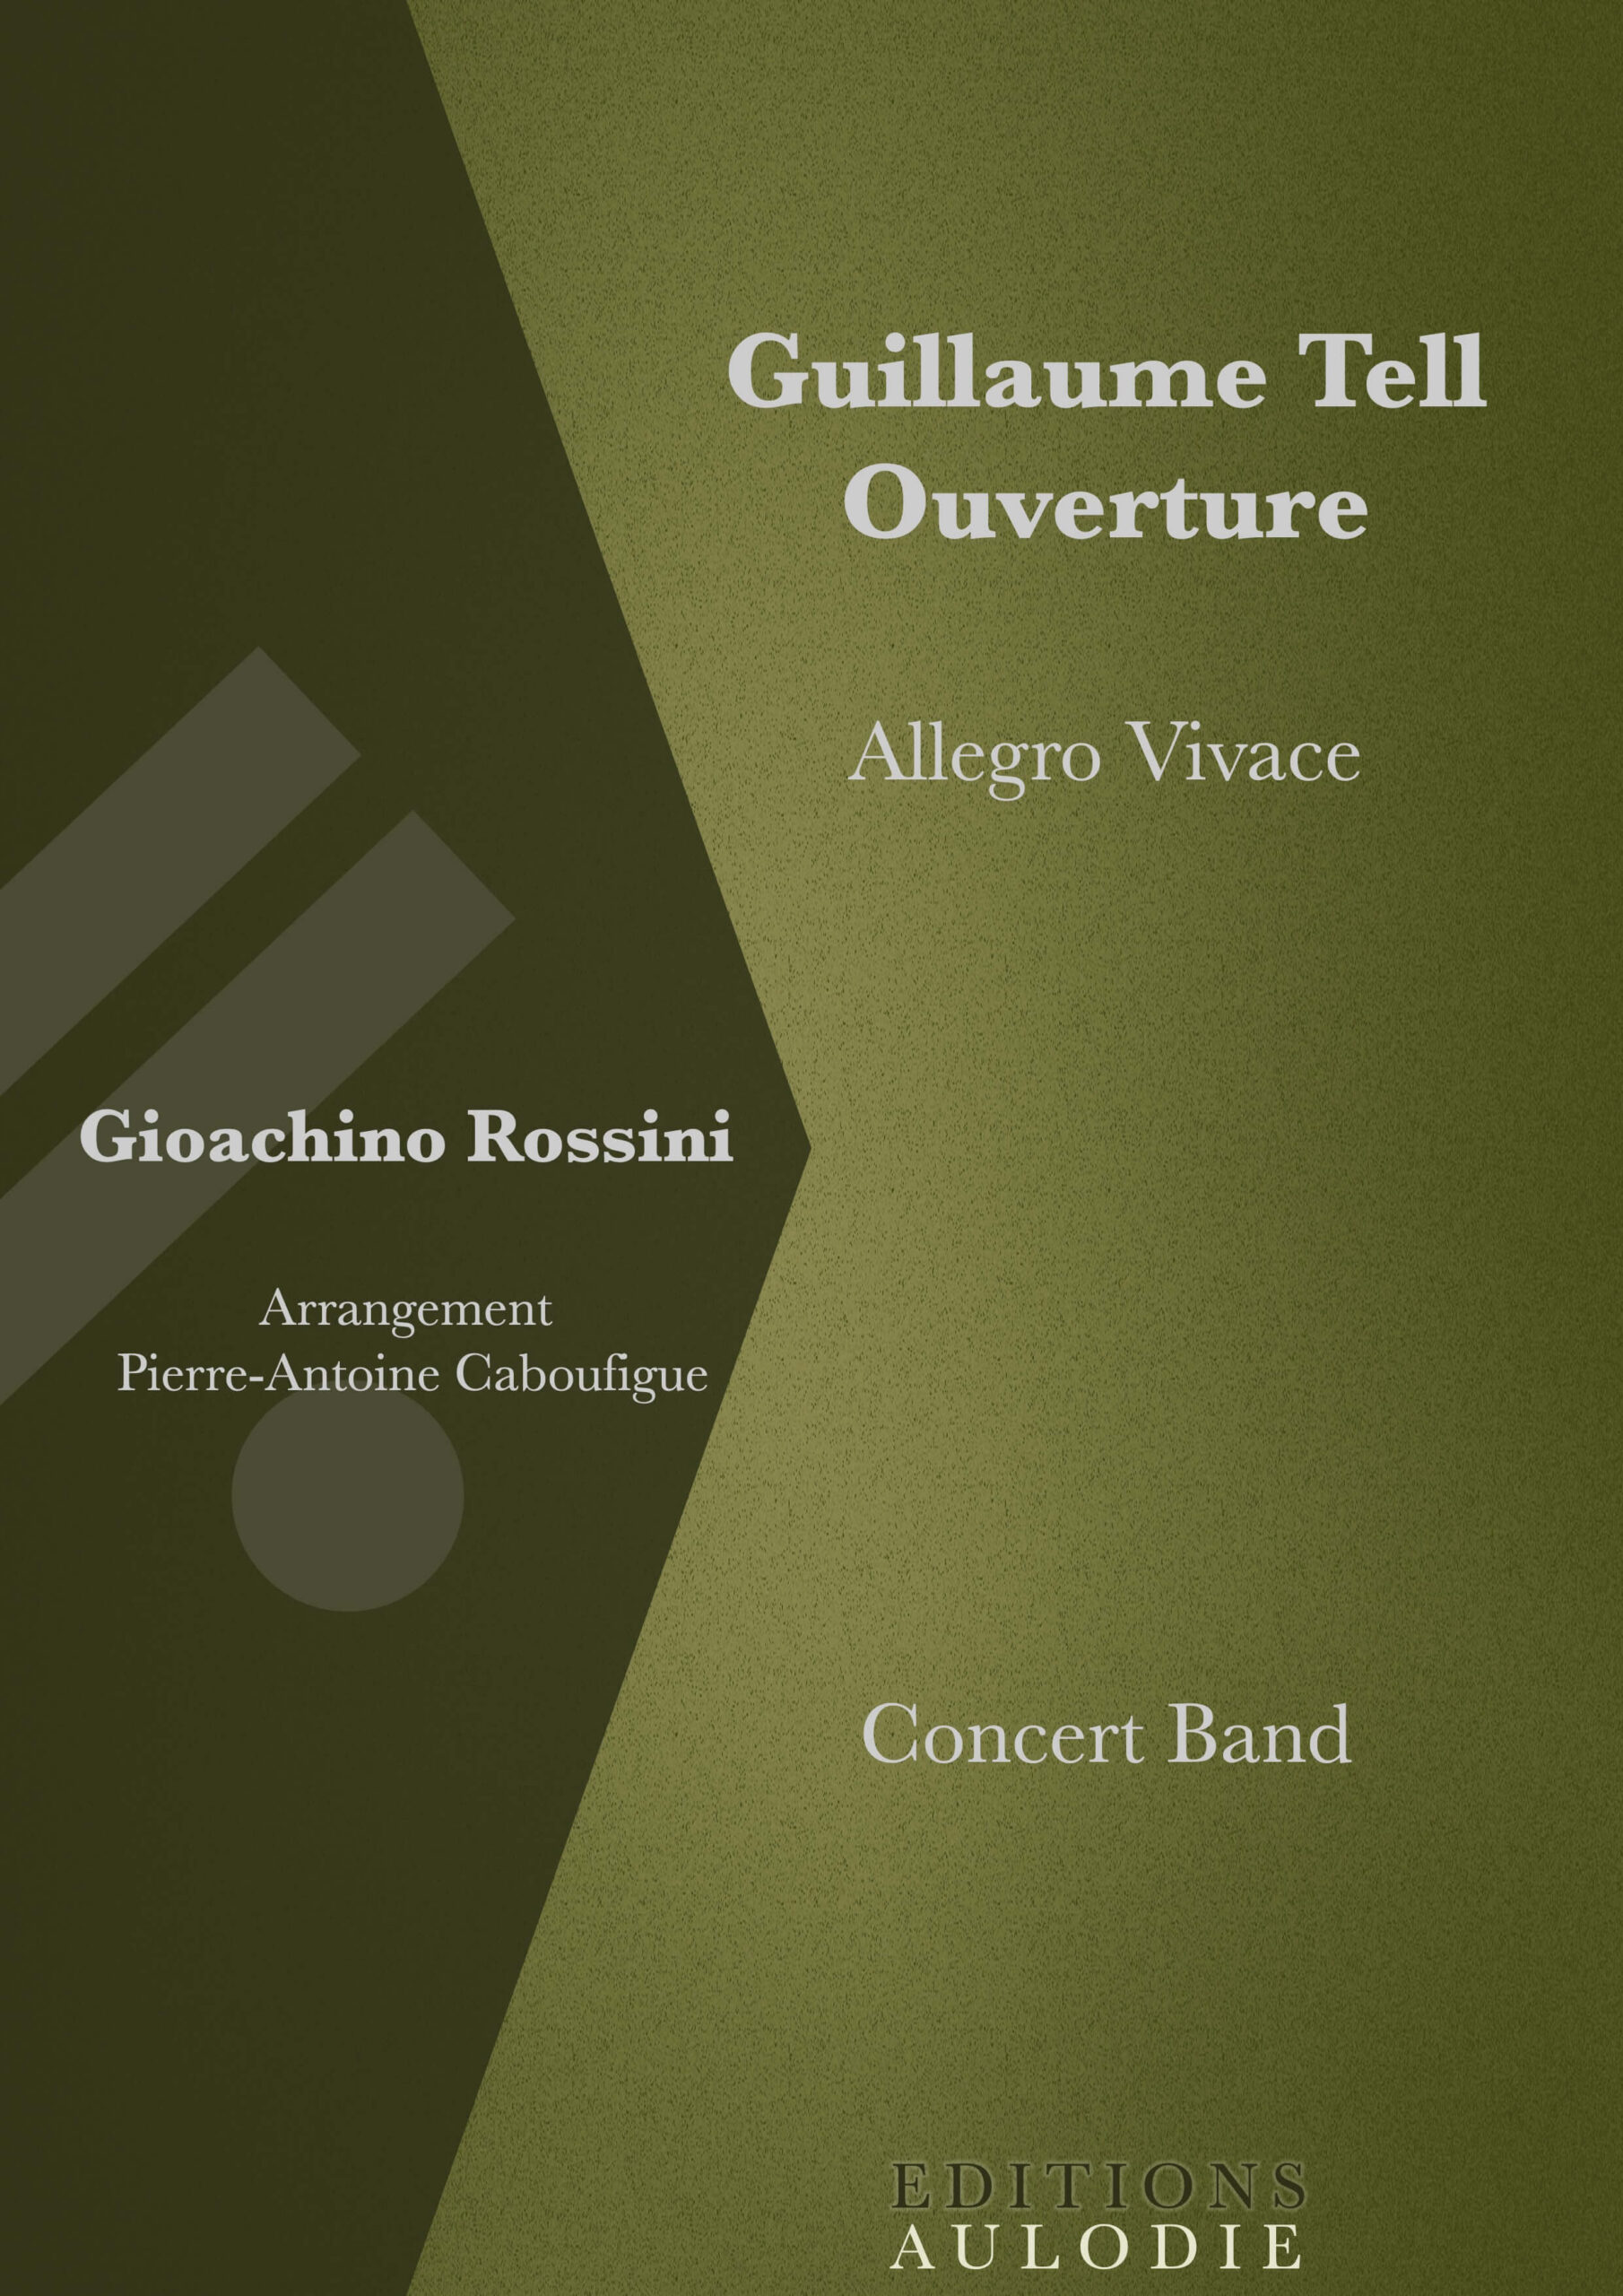 EA01006-Guillaume_Tell_Ouverture-Allegro_Vivace-Gioachino_Rossini-Concert_Band